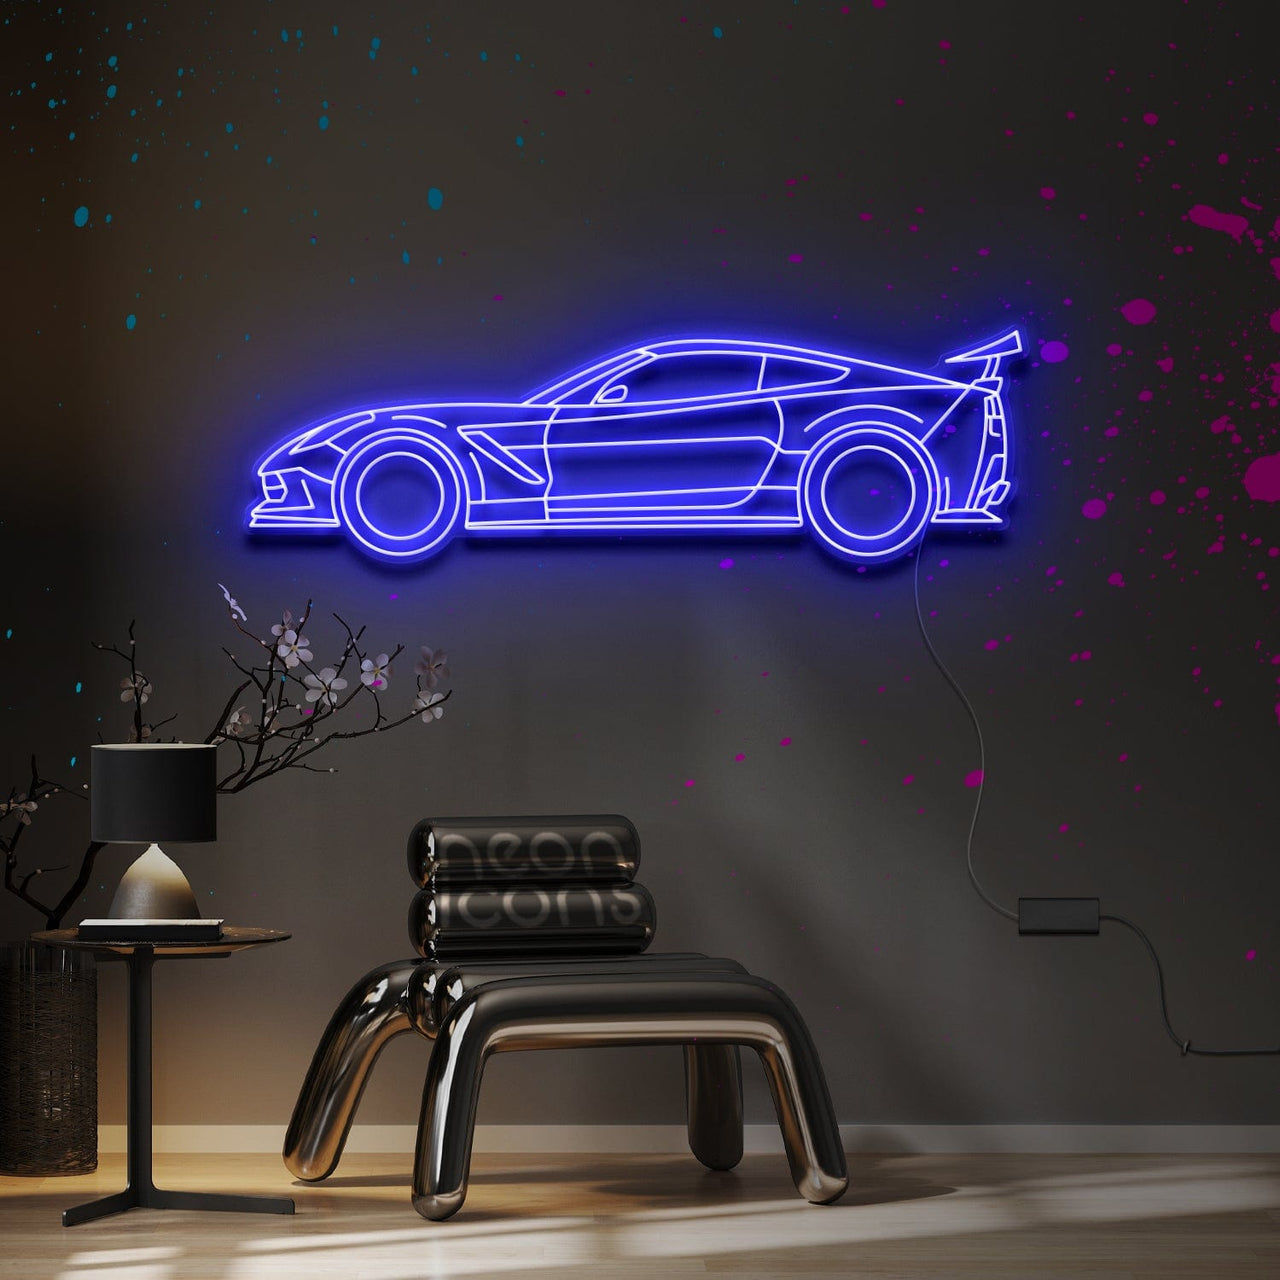 "Corvette C7 ZR1" Neon Sign 4ft x 1.3ft / Blue / LED Neon by Neon Icons